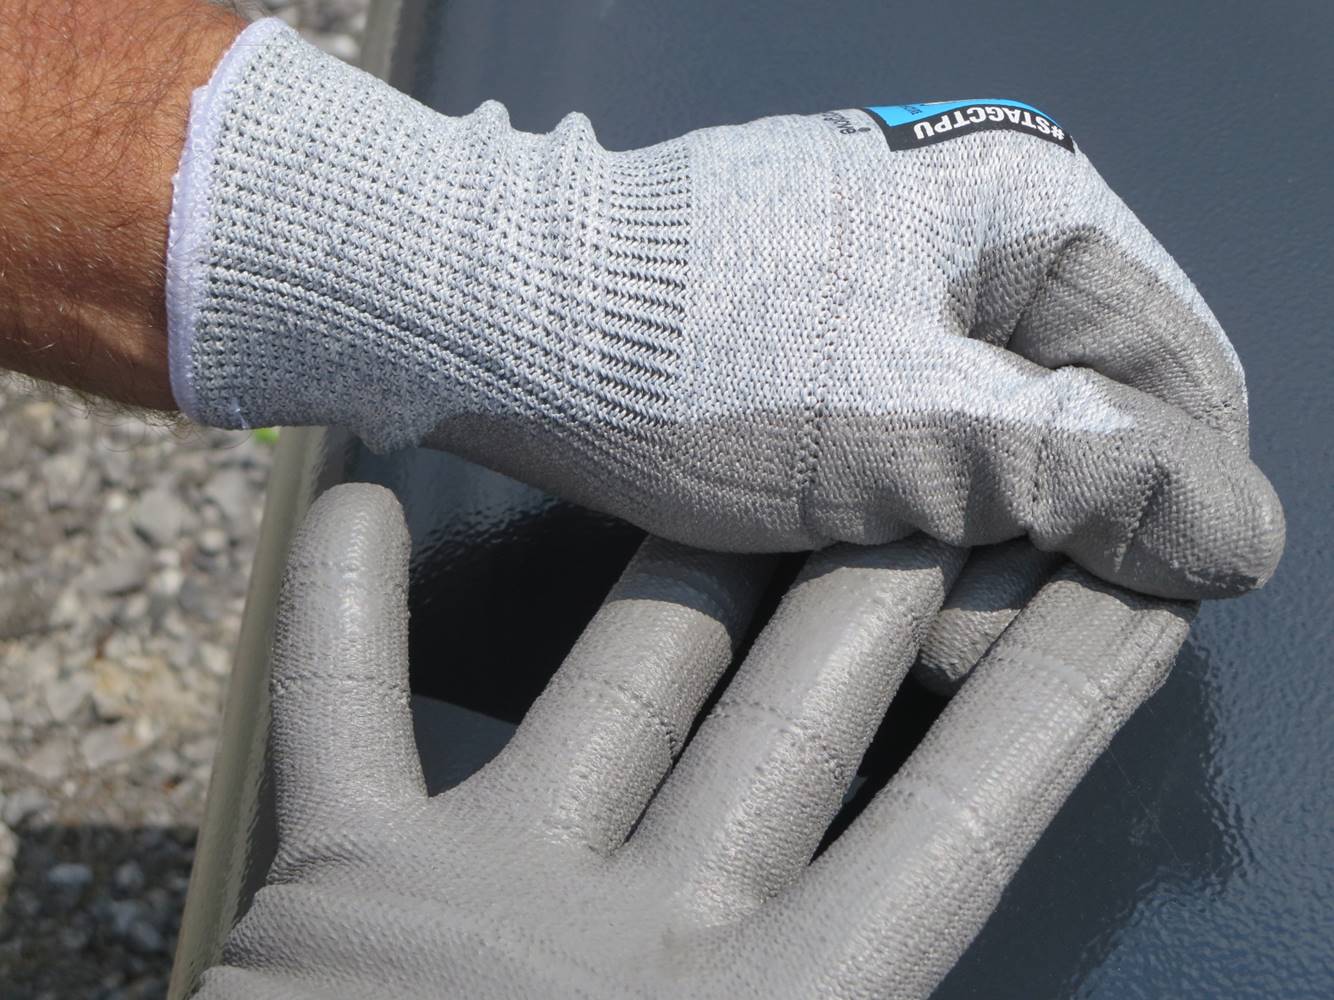 Superior Glove Dexterity NT Cut-Resistant Gloves